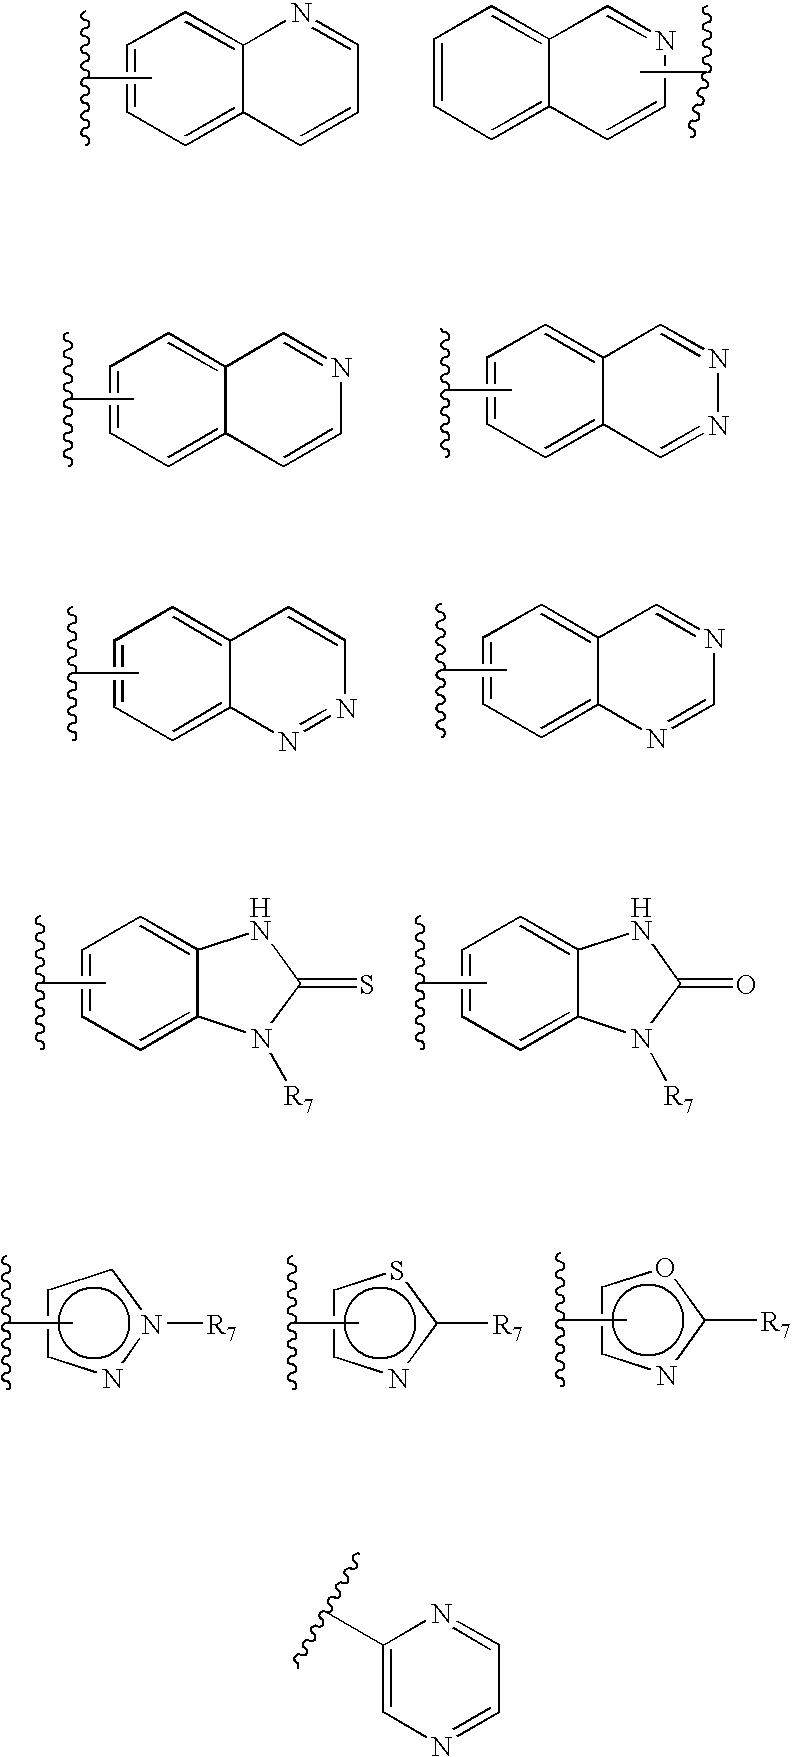 Imidazo[4,5-b]pyridine antagonists of gonadotropin releasing hormone receptor